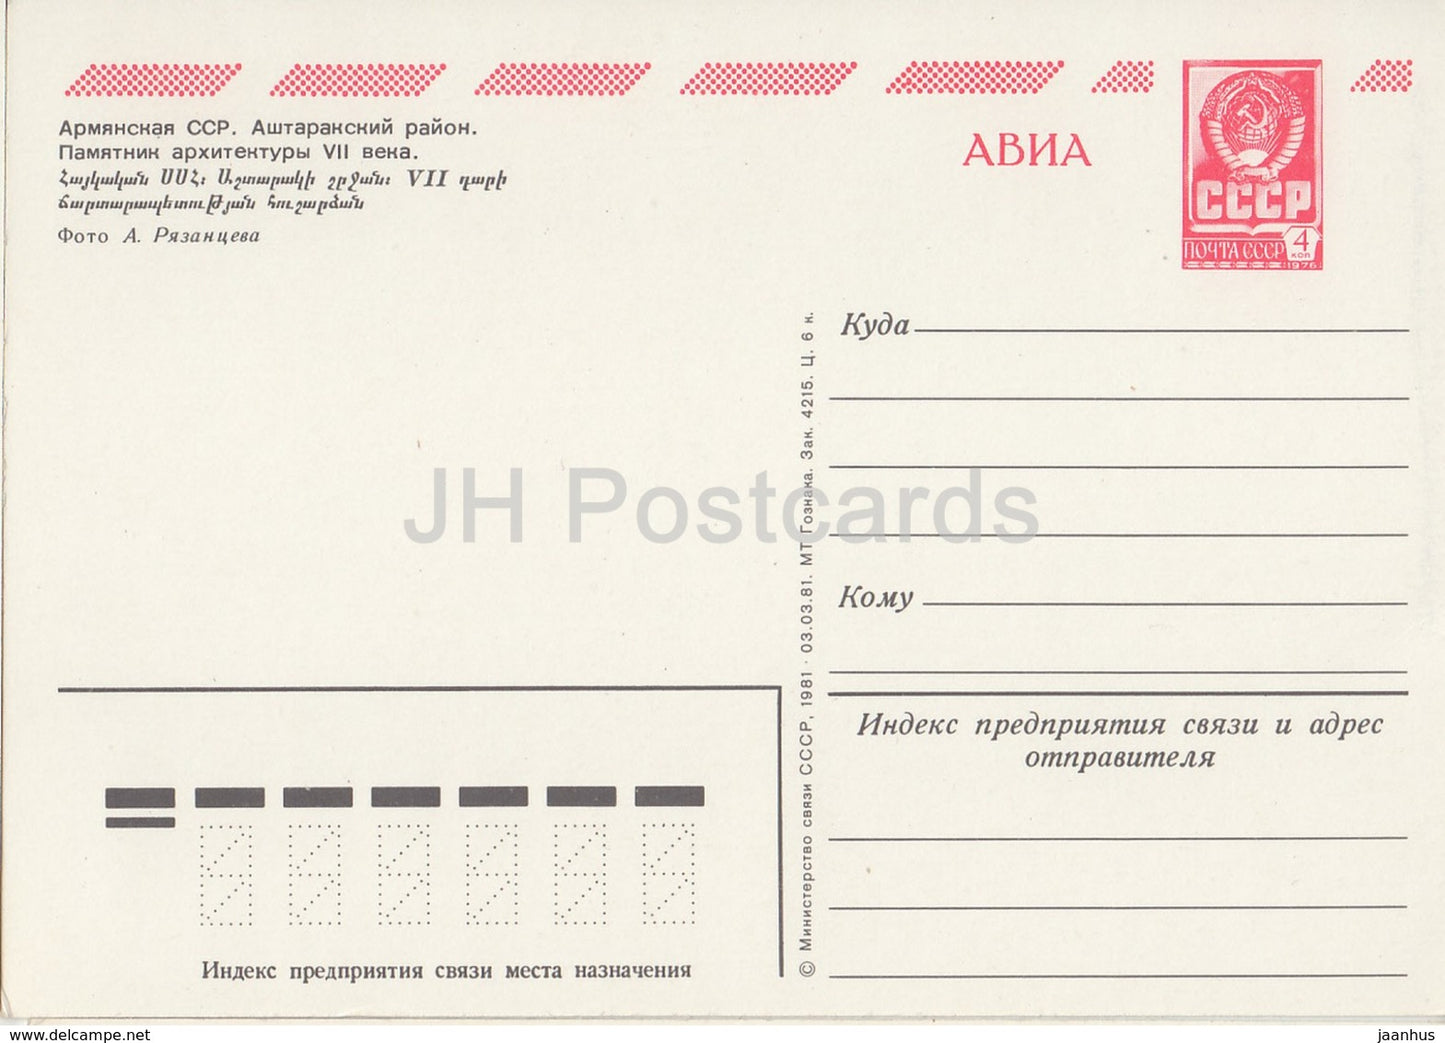 Ashtarak Region - ruins - architectural monument - AVIA - postal stationery - 1981 - Armenia USSR -  unused